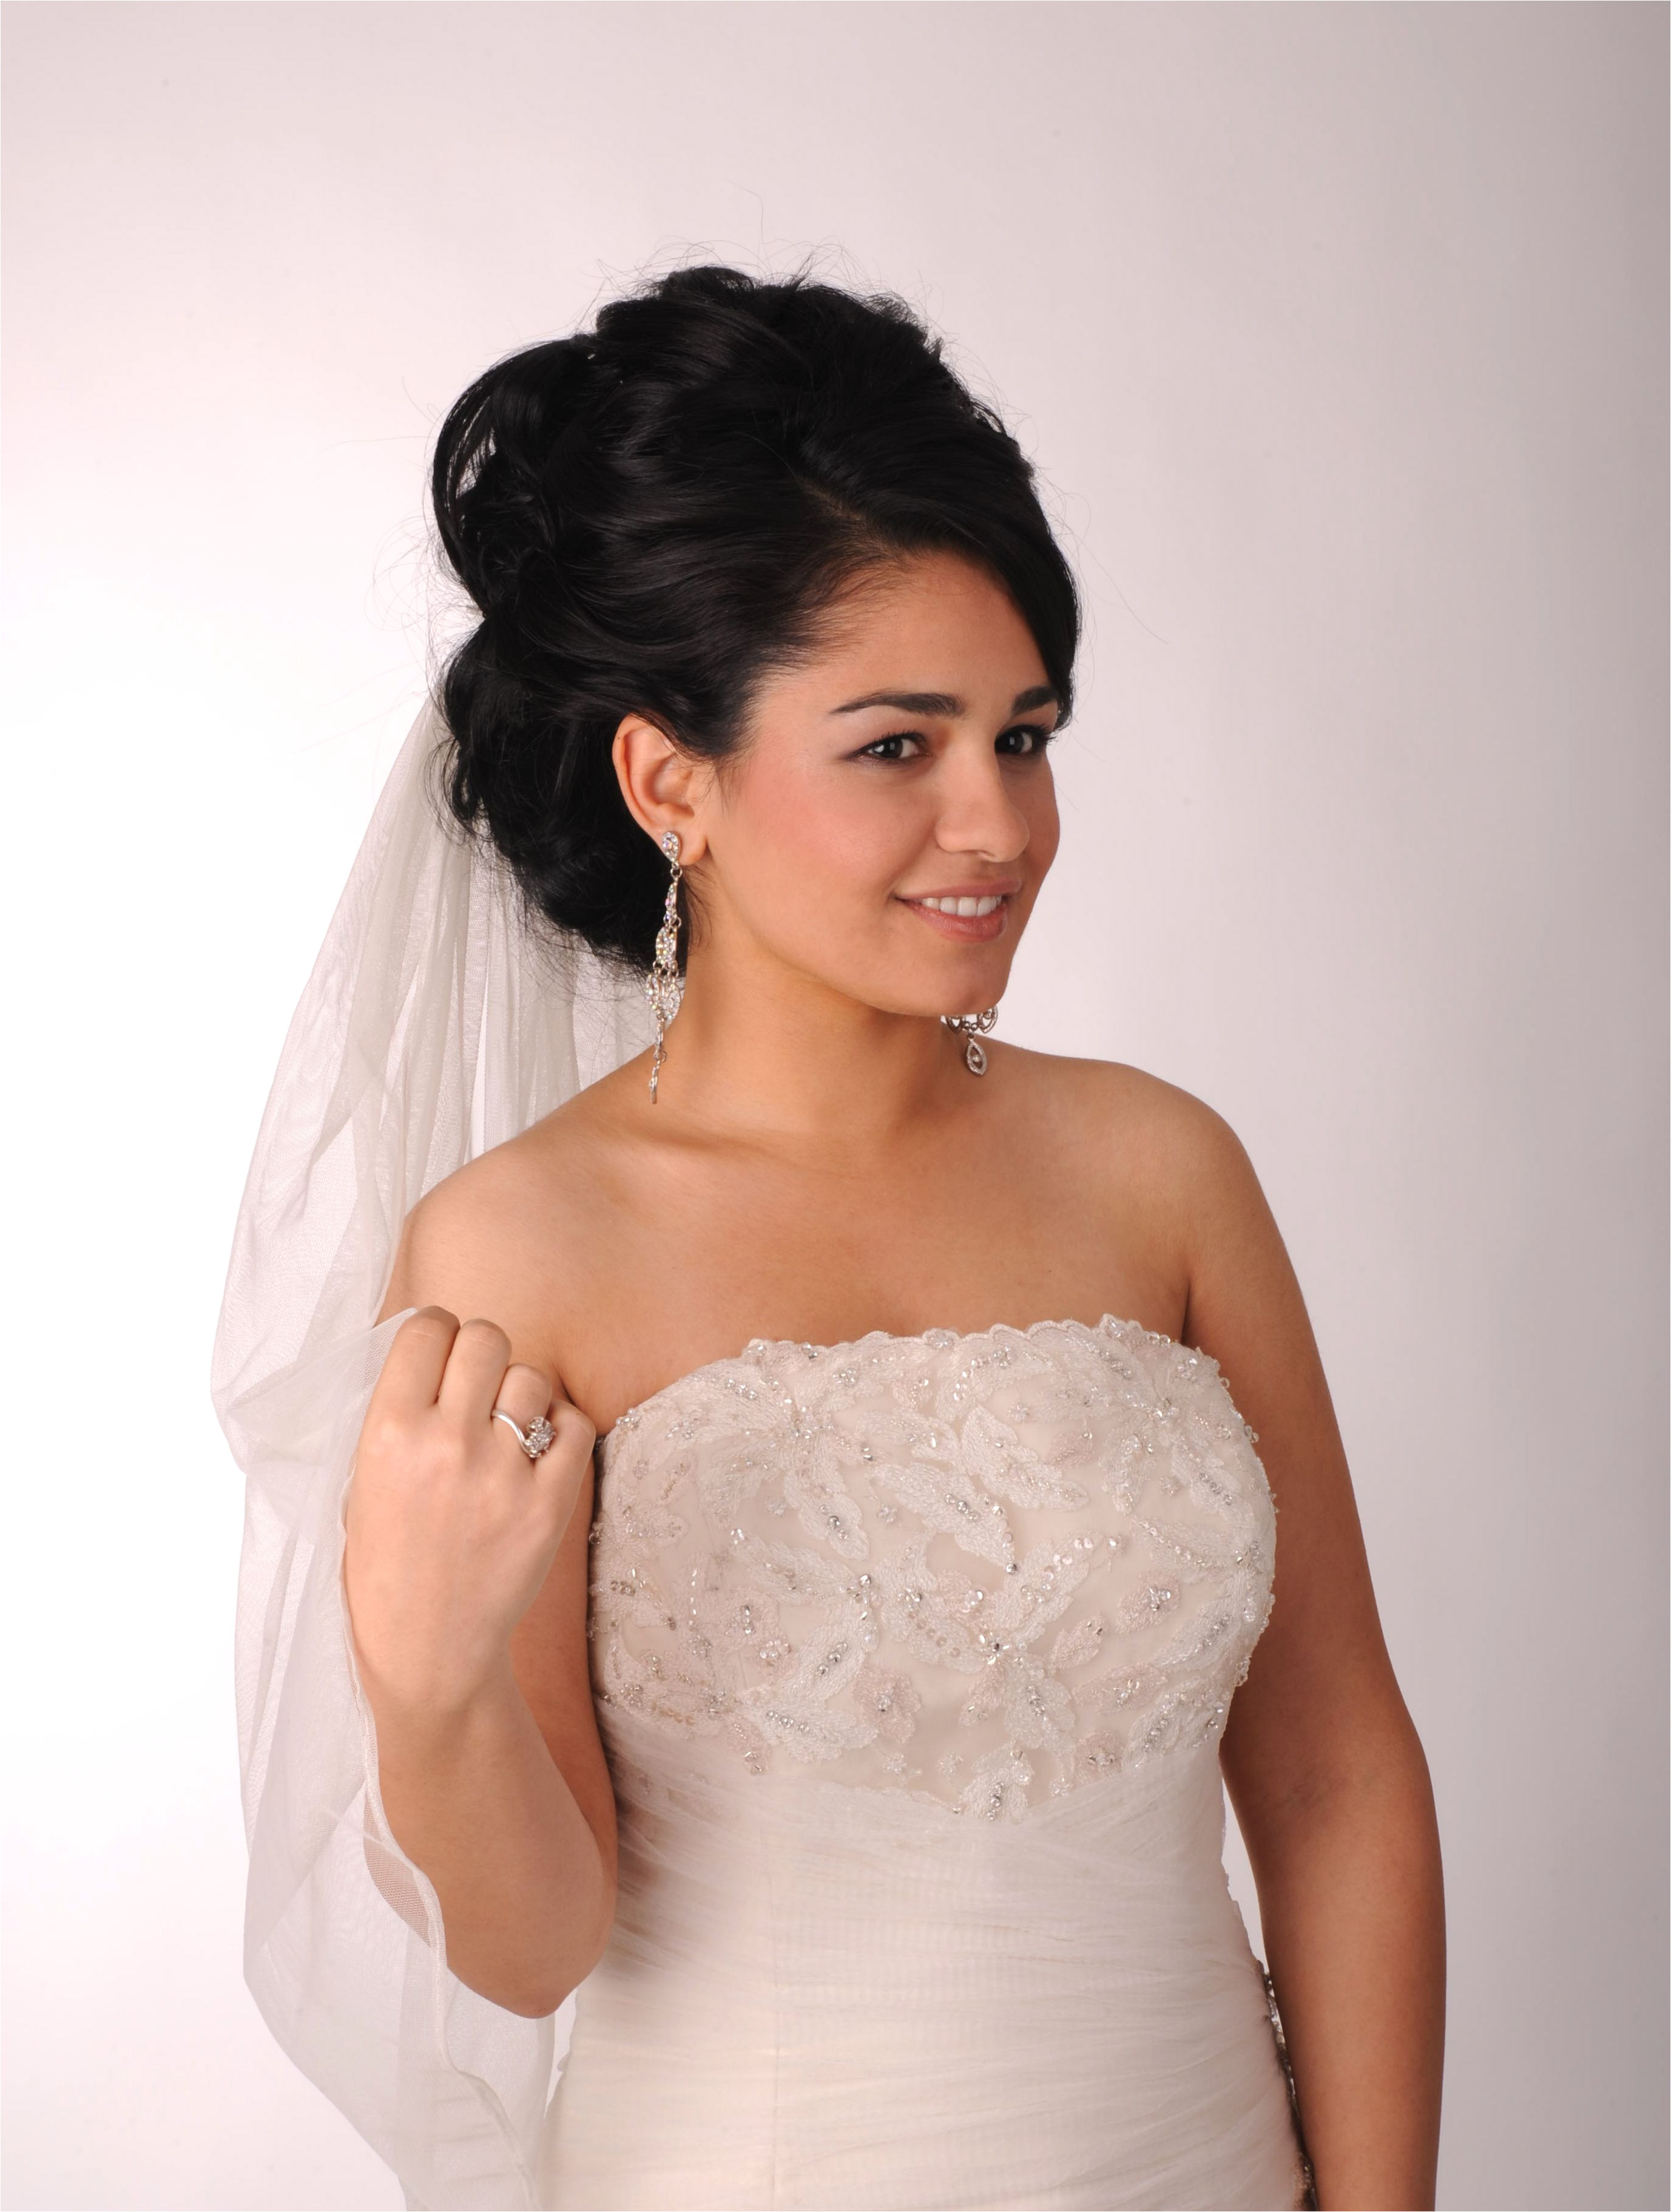 Dark hair bride with veil